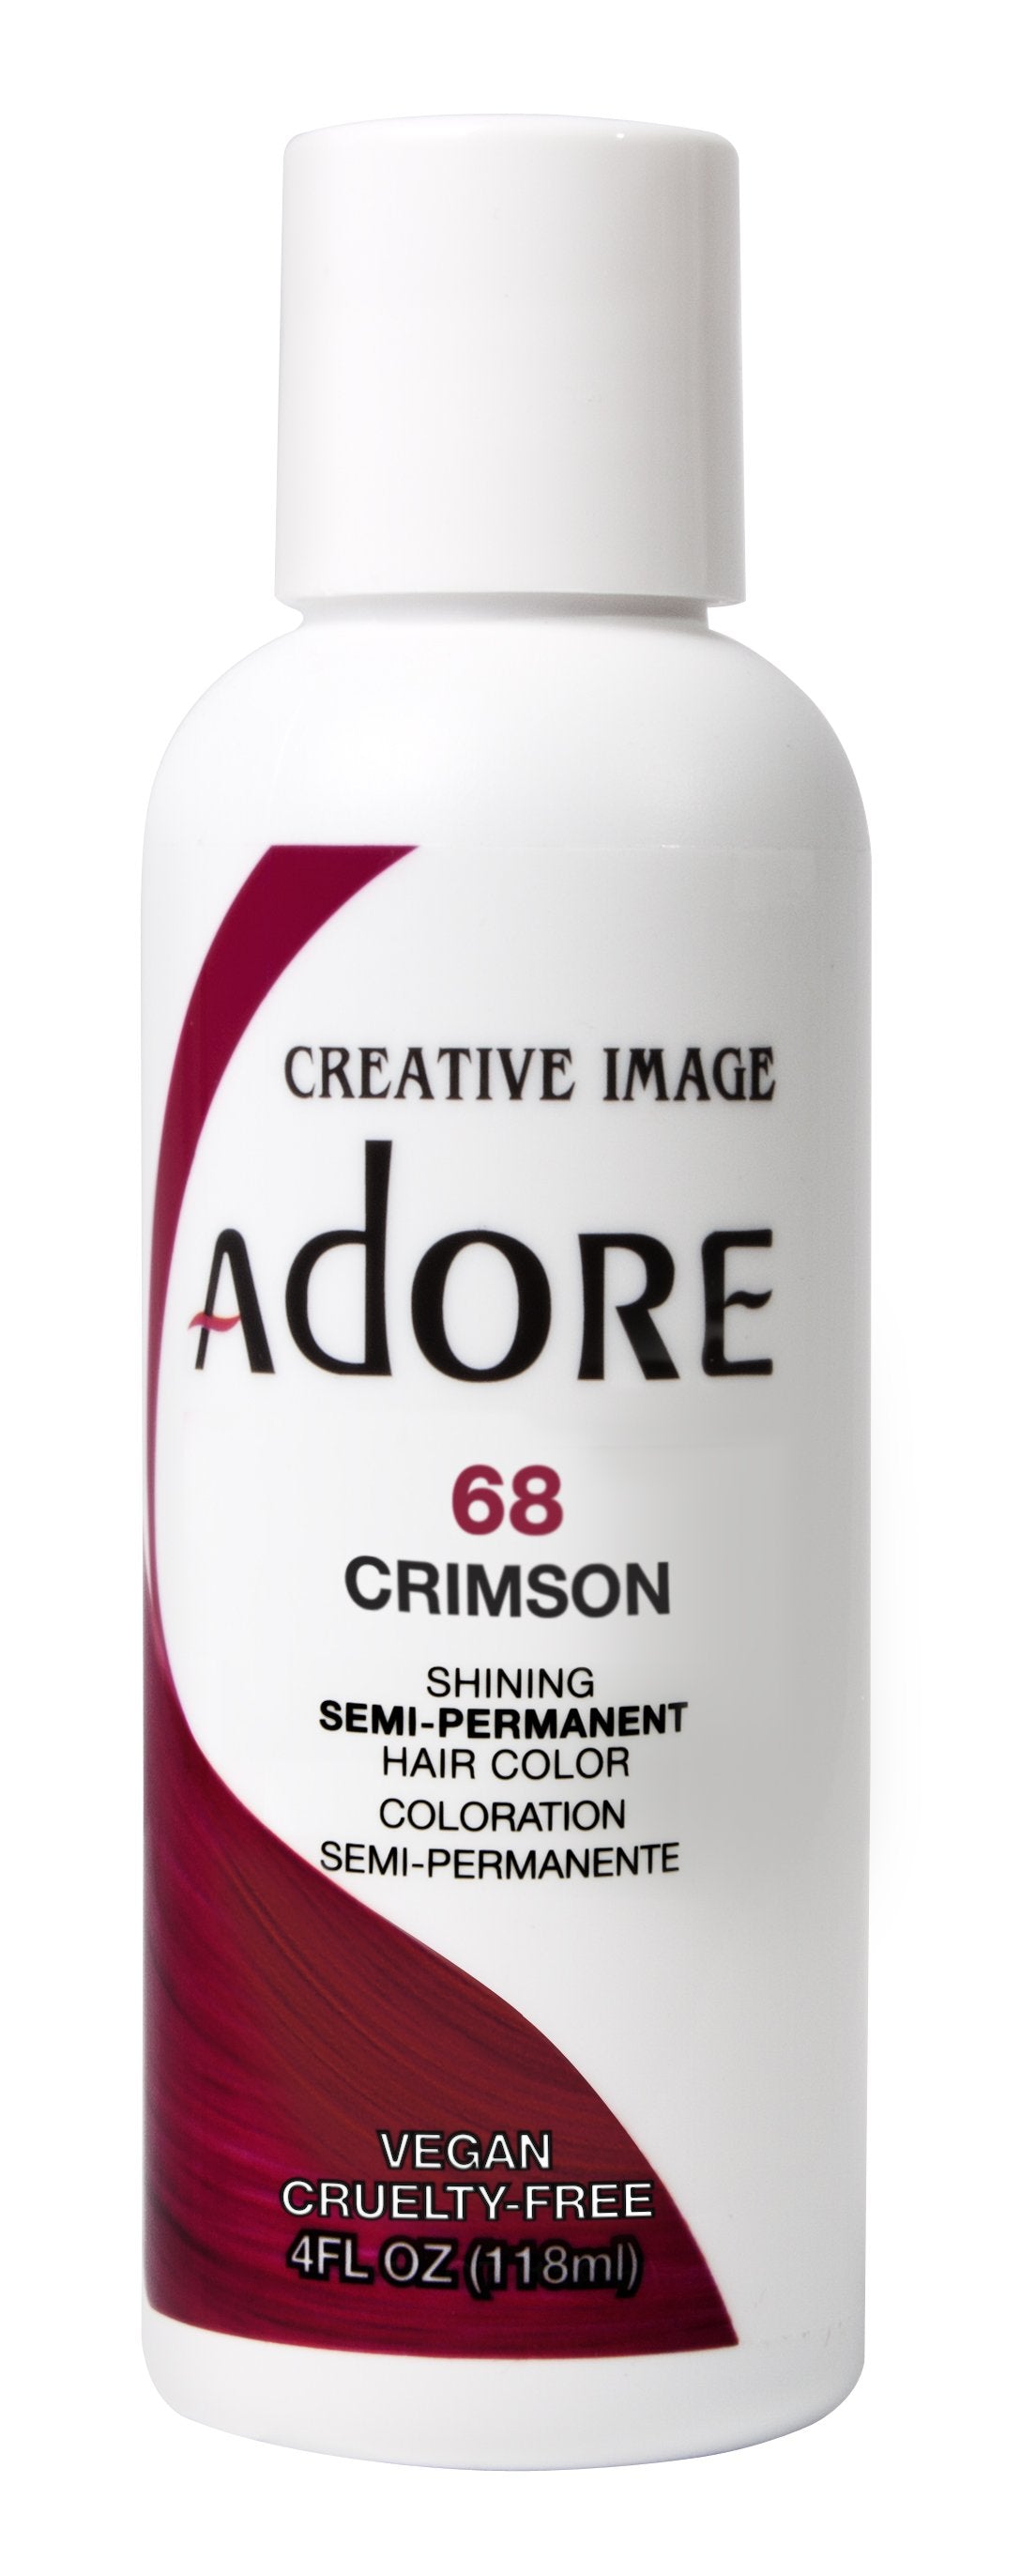 Adore #68 Crimson